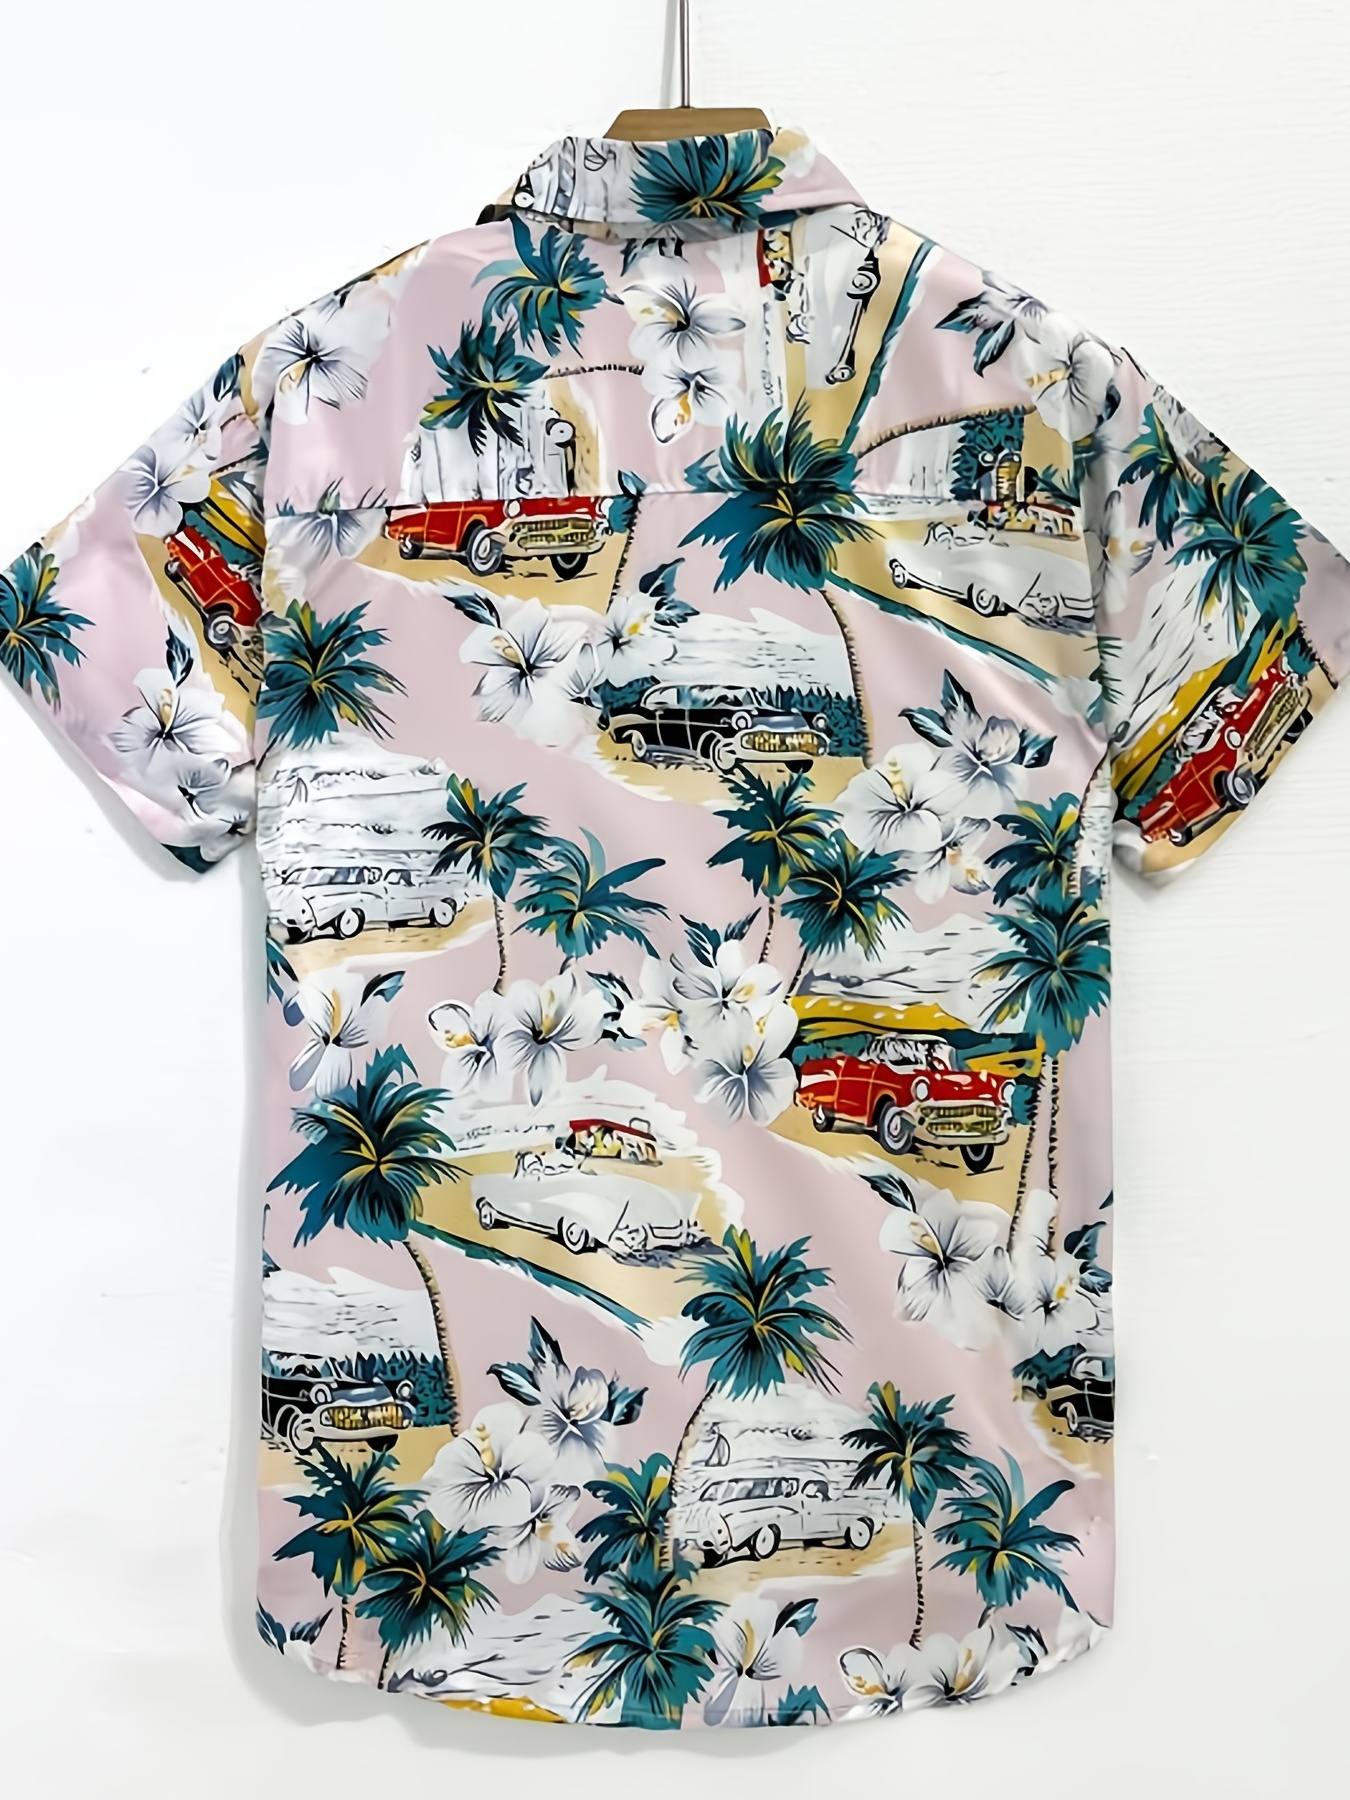 coconut tree vintage car print mens casual short sleeve shirt mens shirt for summer vacation resort details 1